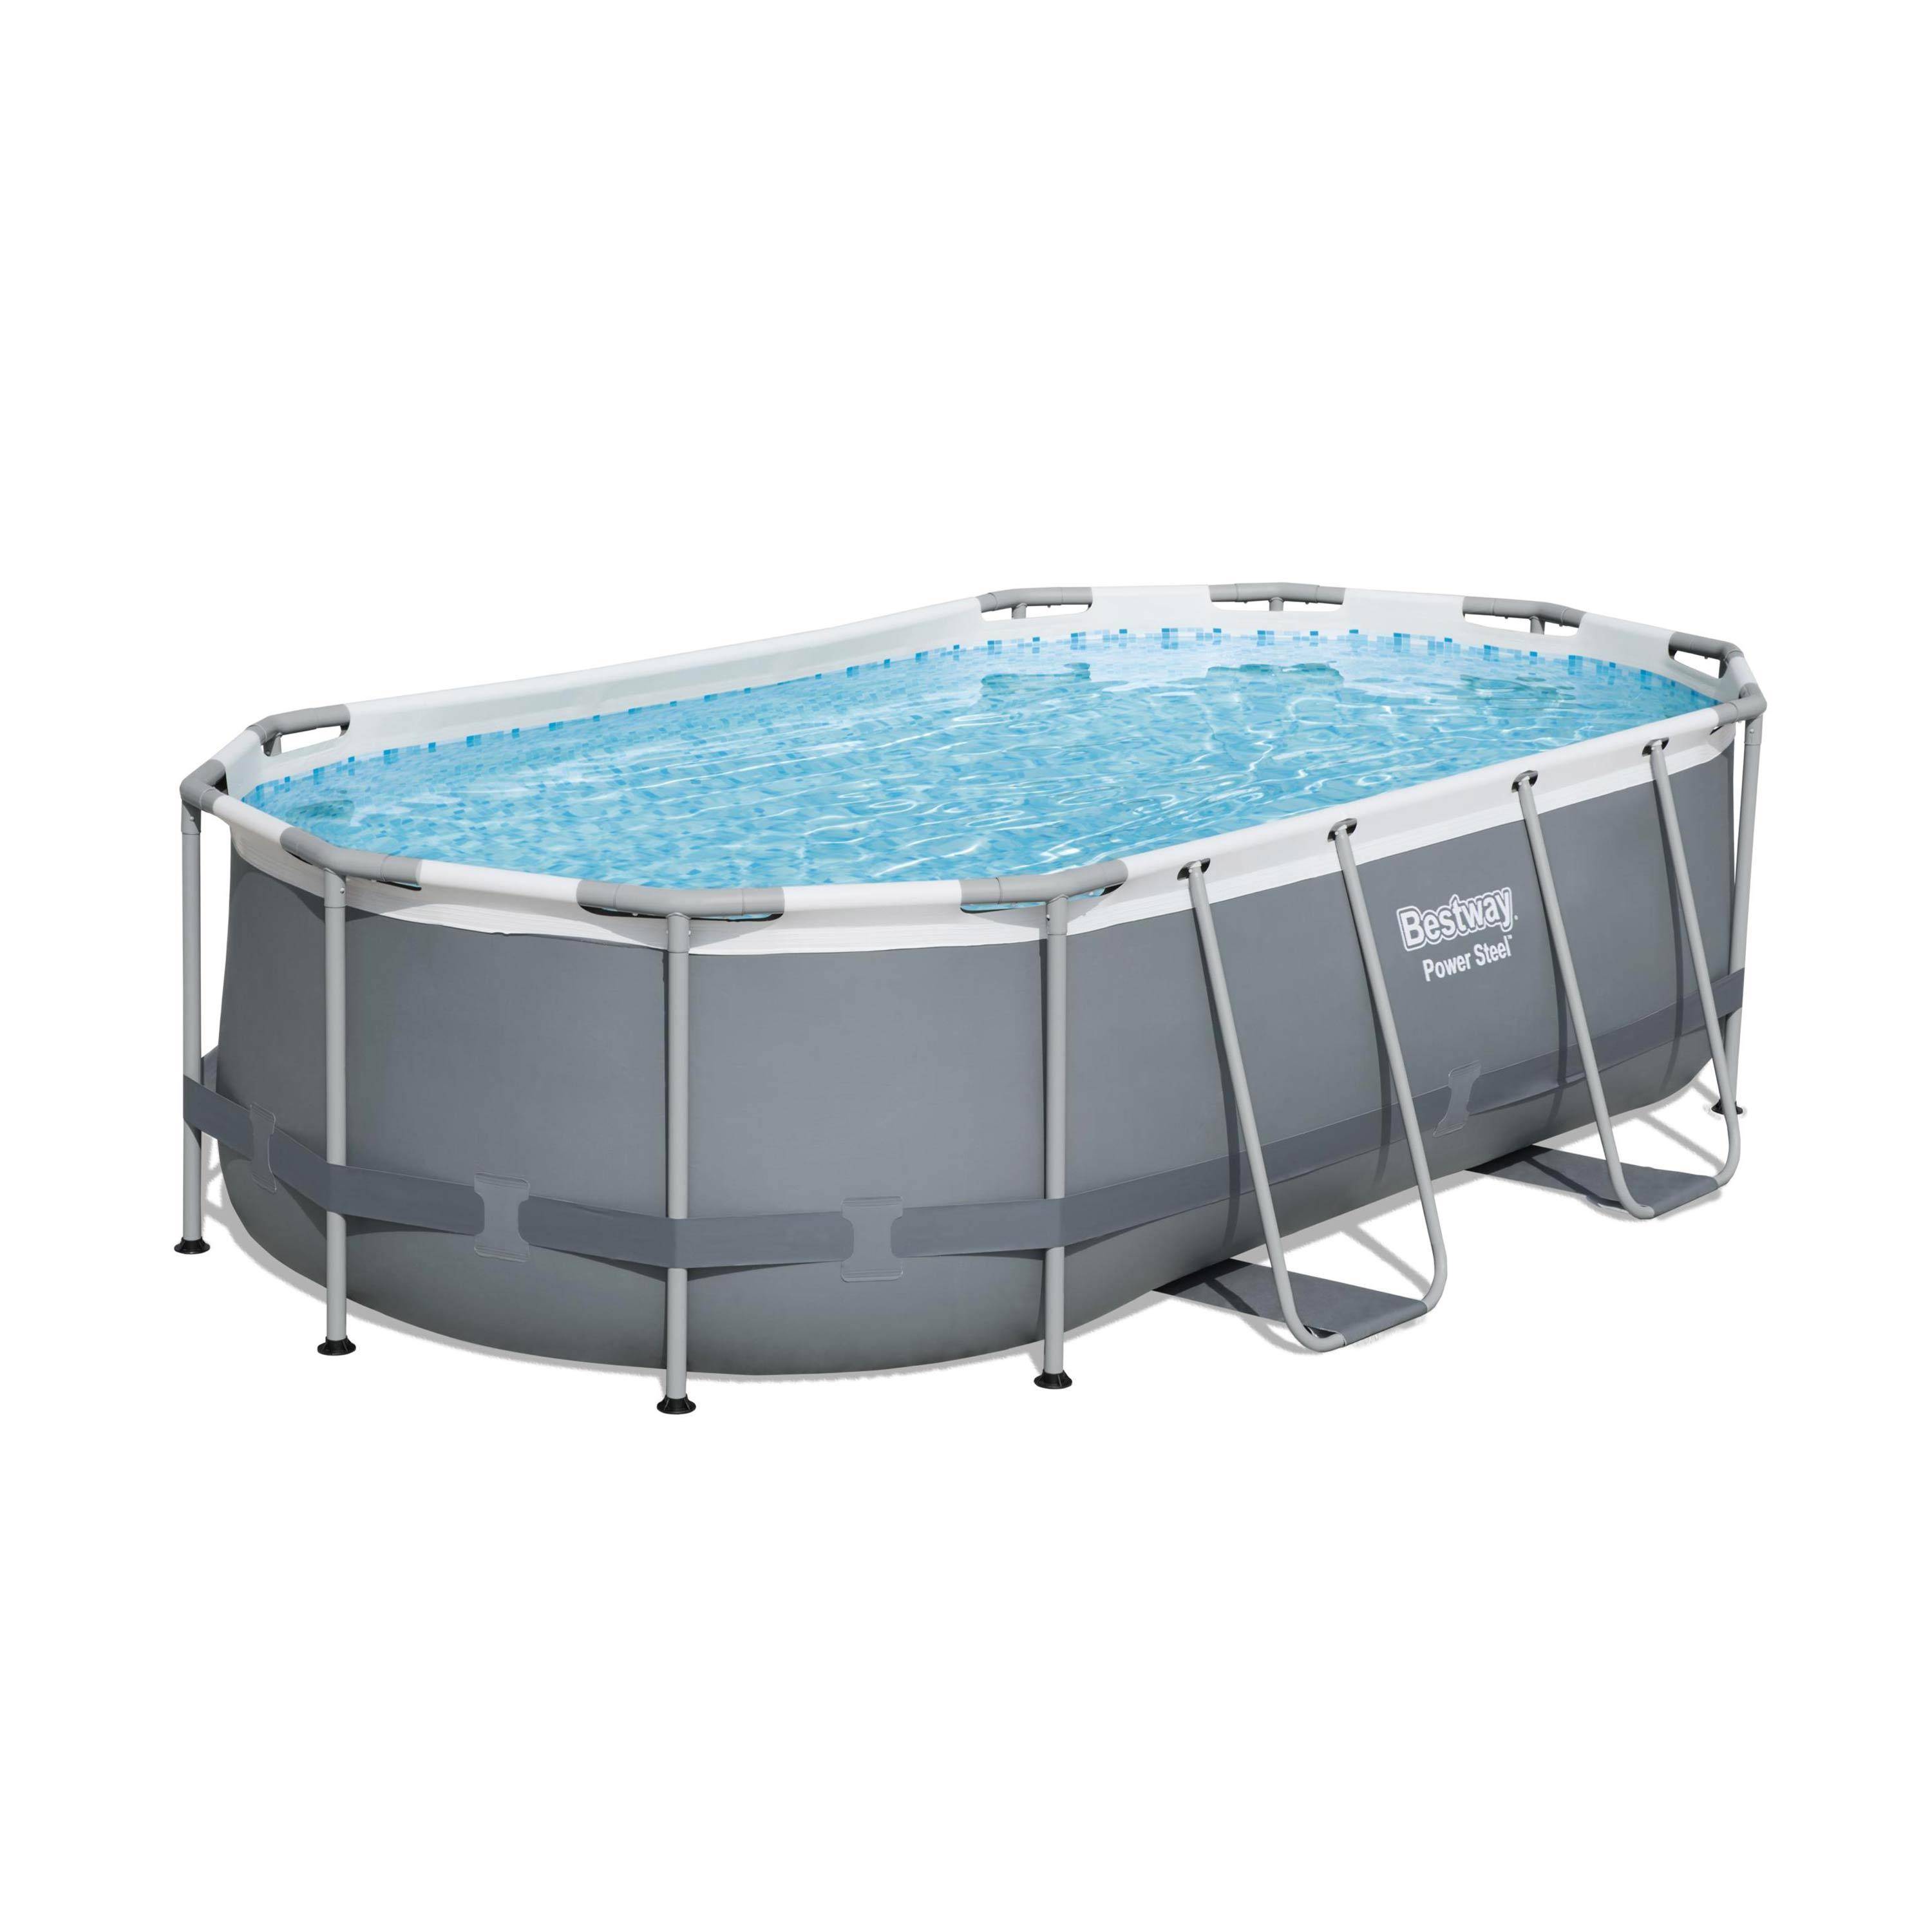 Compleet BESTWAY zwembad – Spinelle grijs – Ovaal frame zwembad 4x2 m, inclusief filterpomp, 3-trapsladder en vlotter,sweeek,Photo2